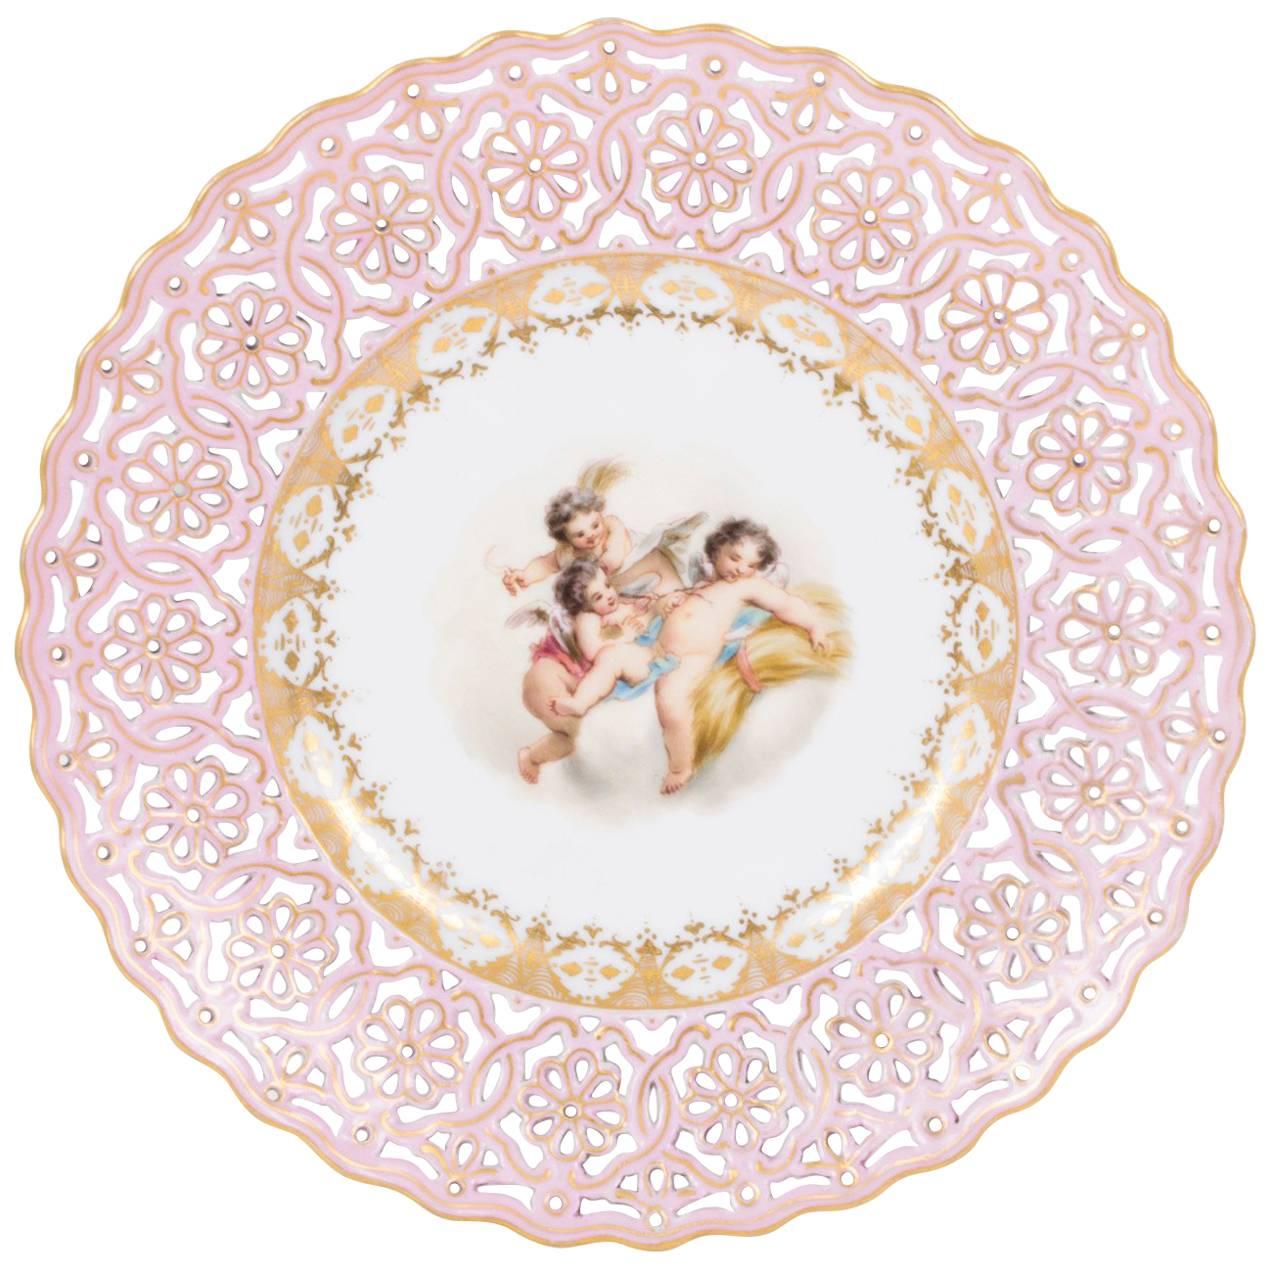 Early 20th Century Meissen Porcelain Cabinet Plate by Francesca Hirsch